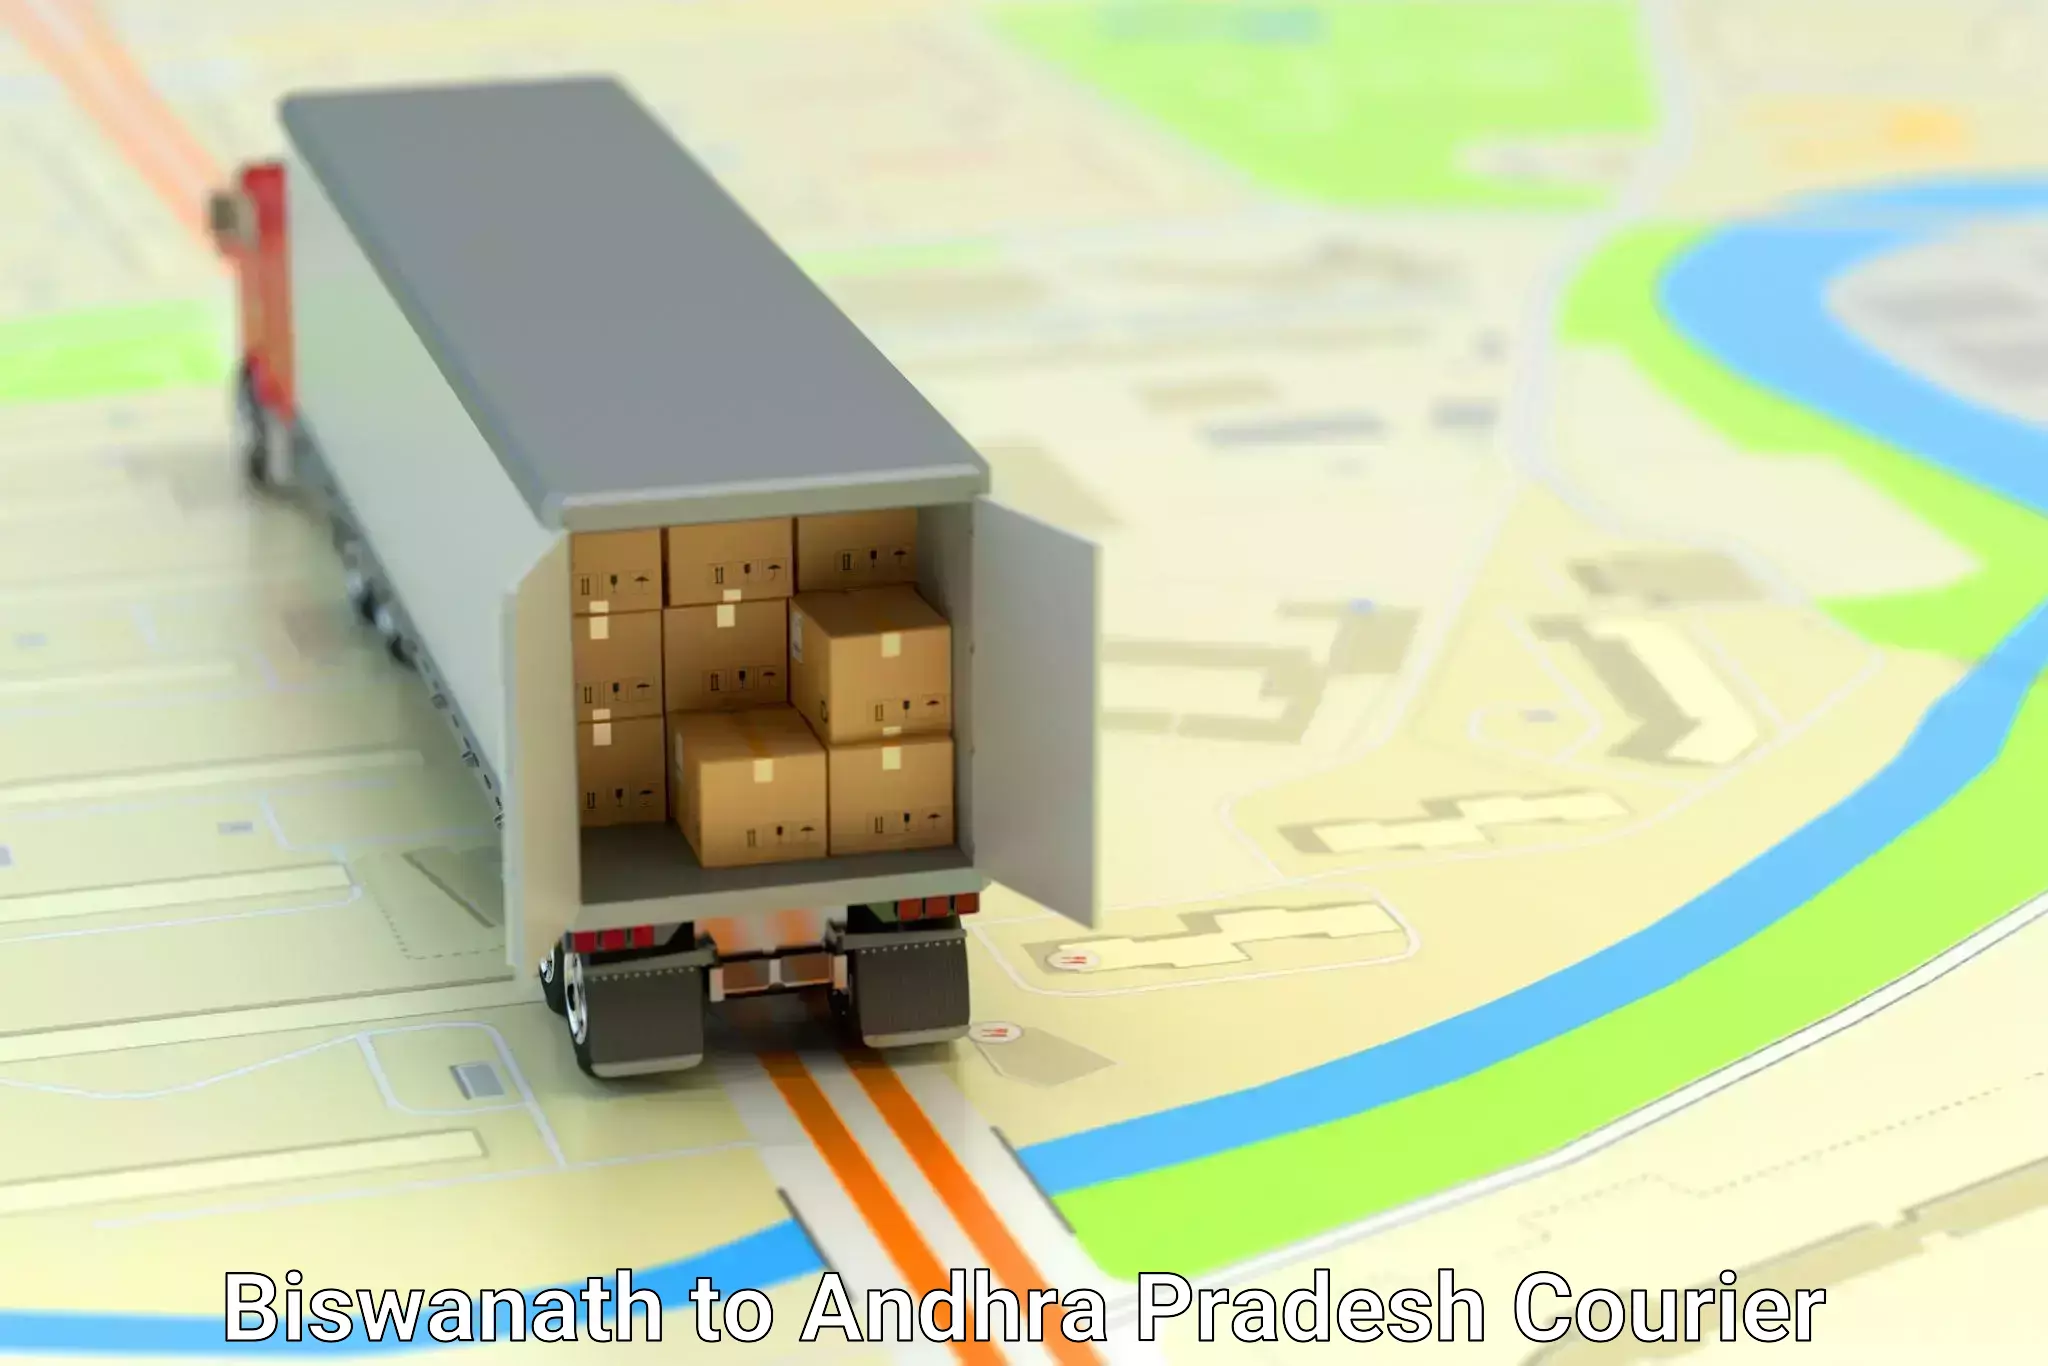 Package tracking Biswanath to Andhra Pradesh